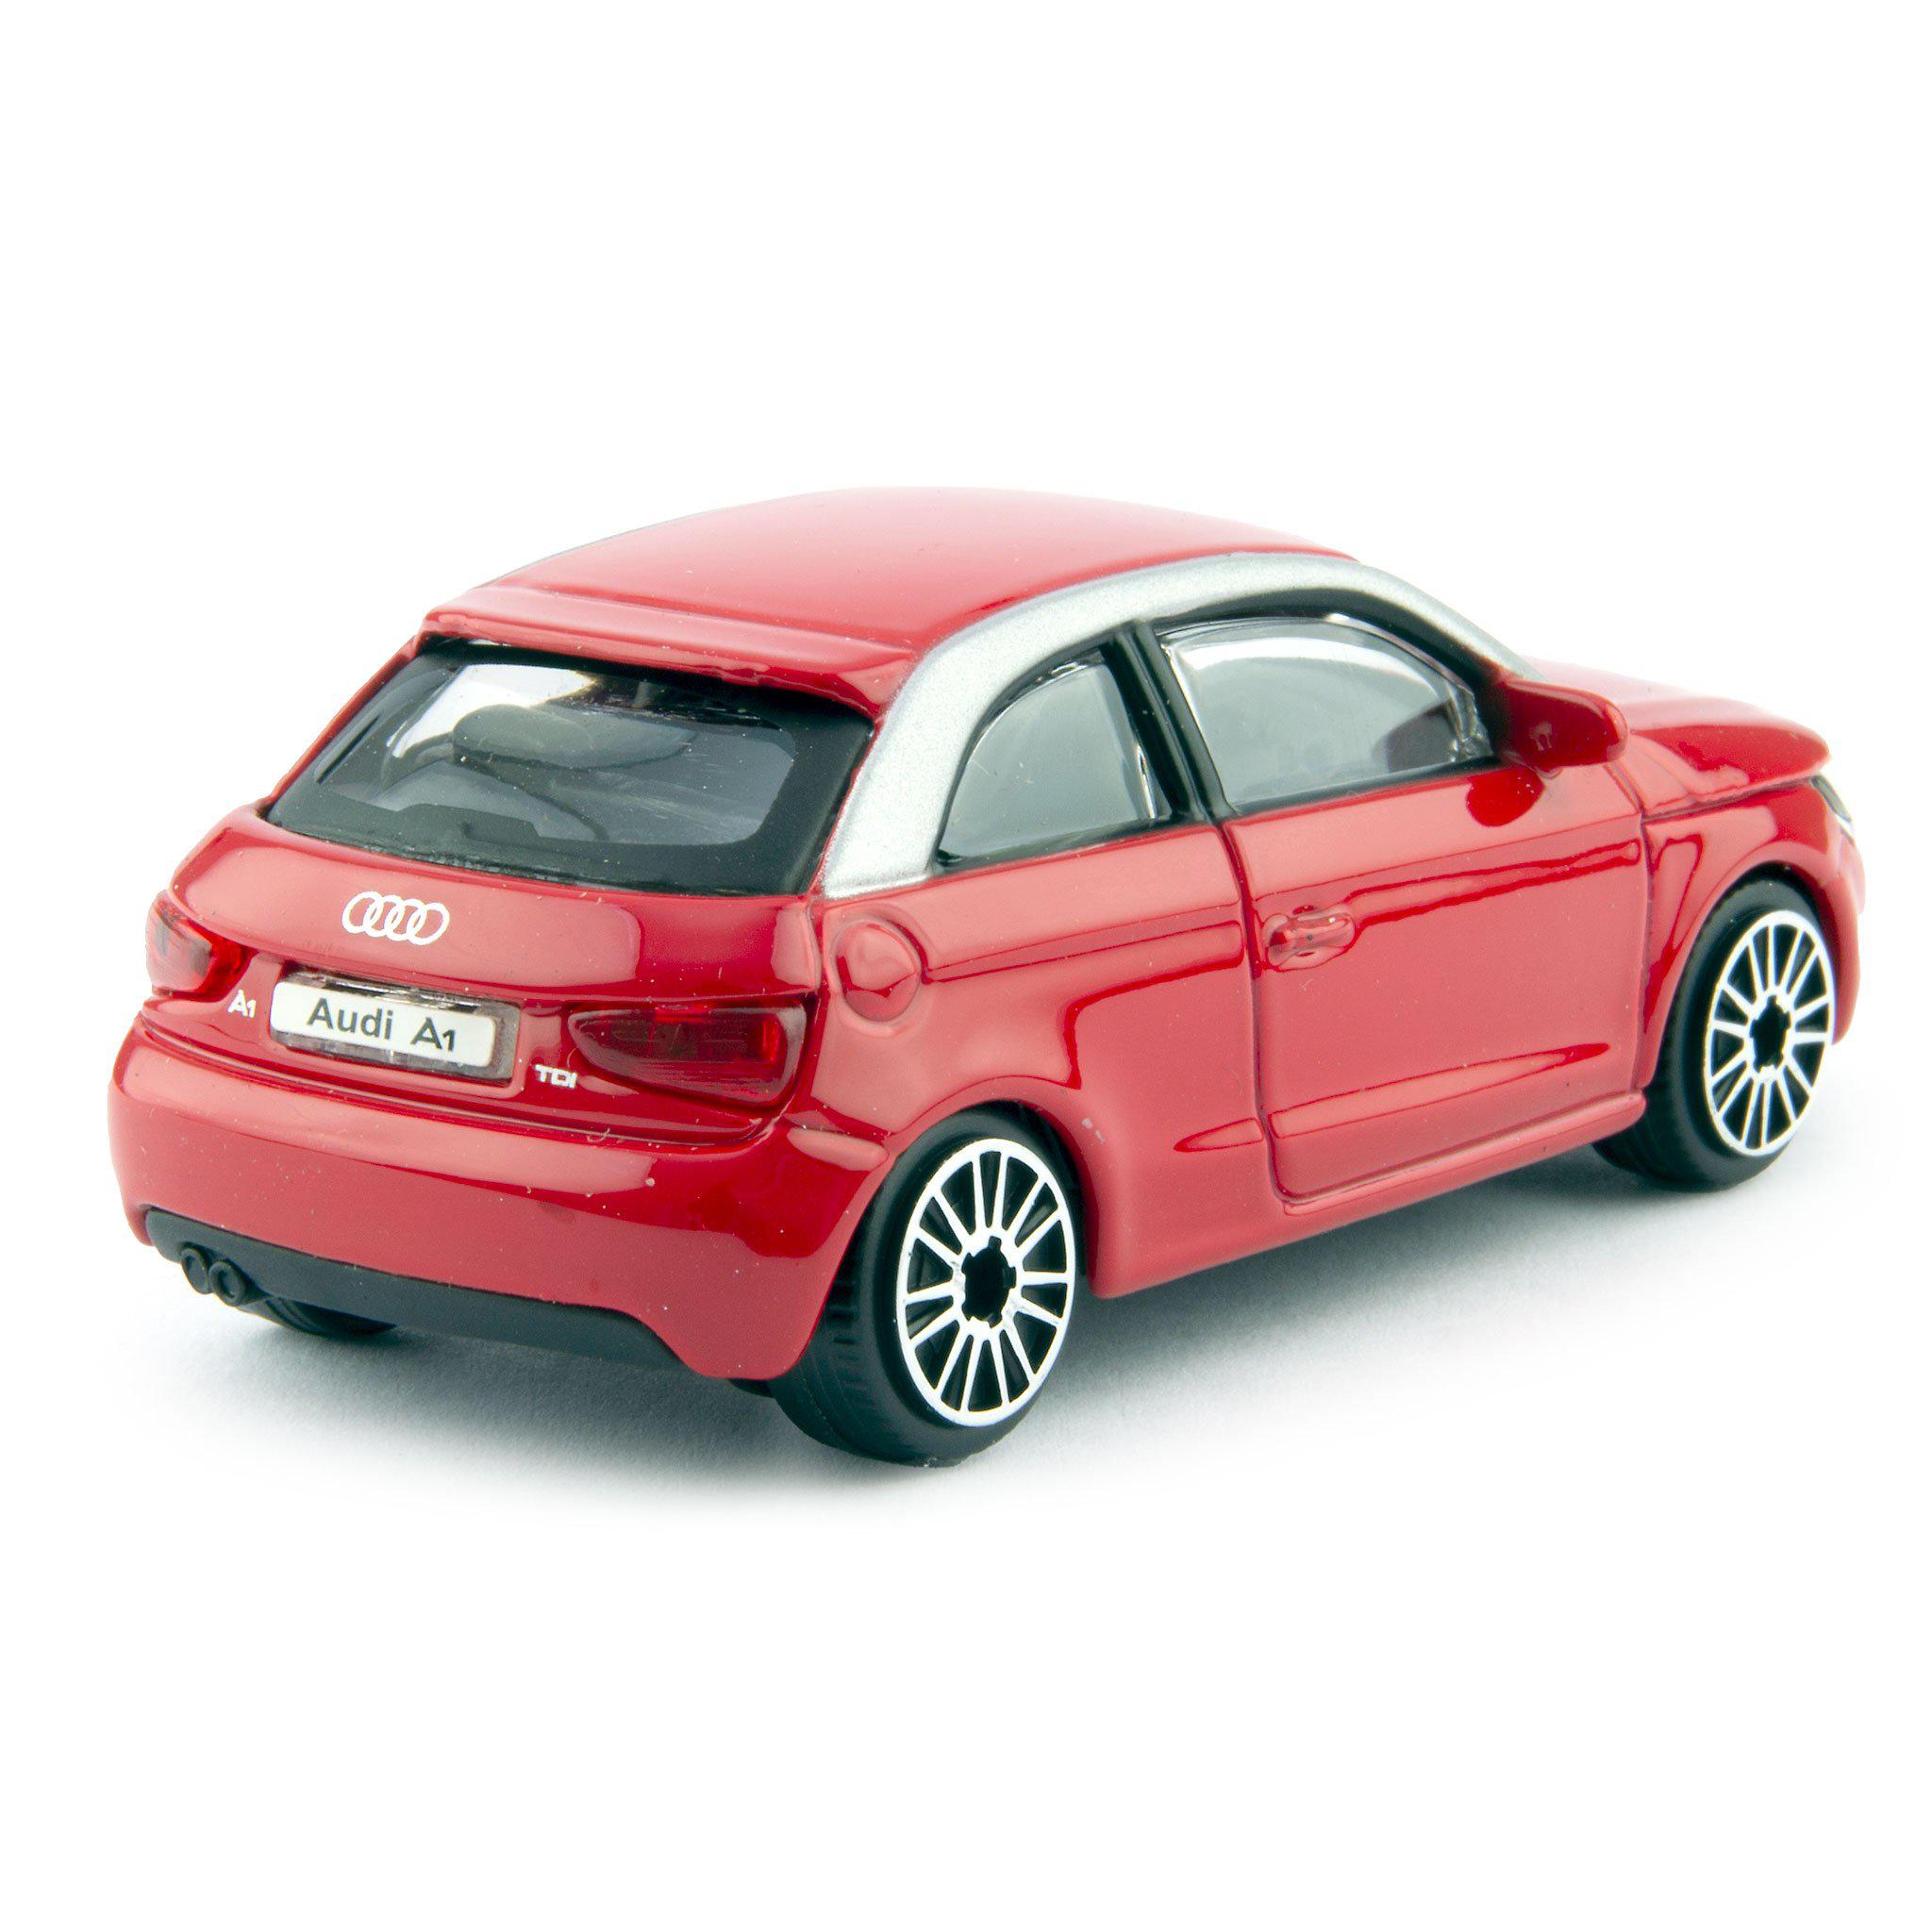 Audi A1 Diecast Toy Car 2010 red - 1:43 Scale-Bburago-Diecast Model Centre